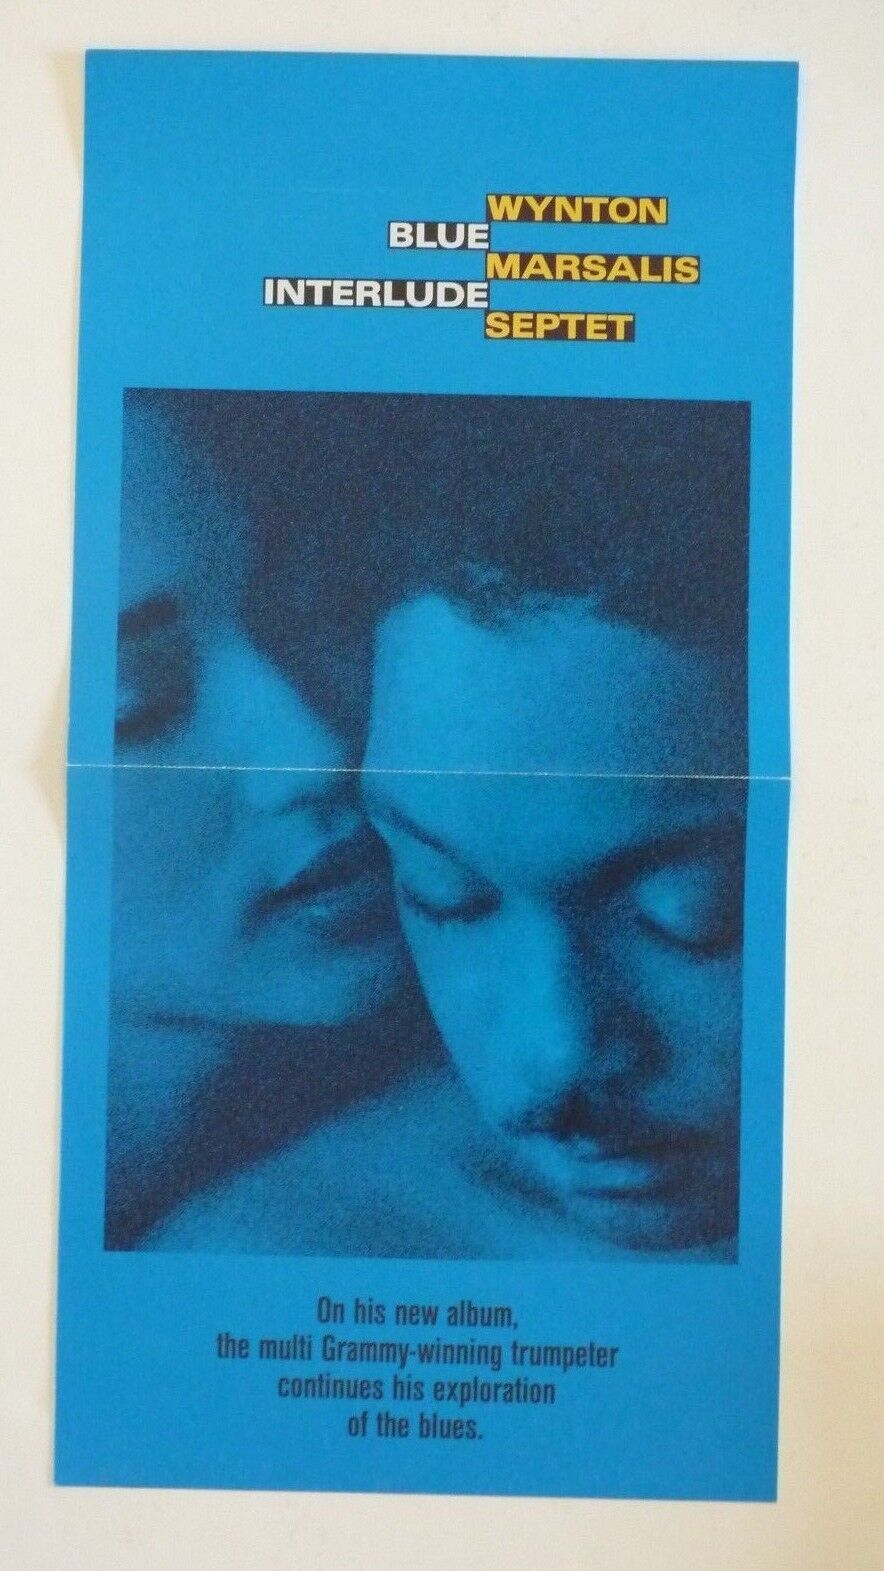 Wynton Marsalis Blue Interlude Septet LP Record Photo Poster painting Flat 12x24 Poster